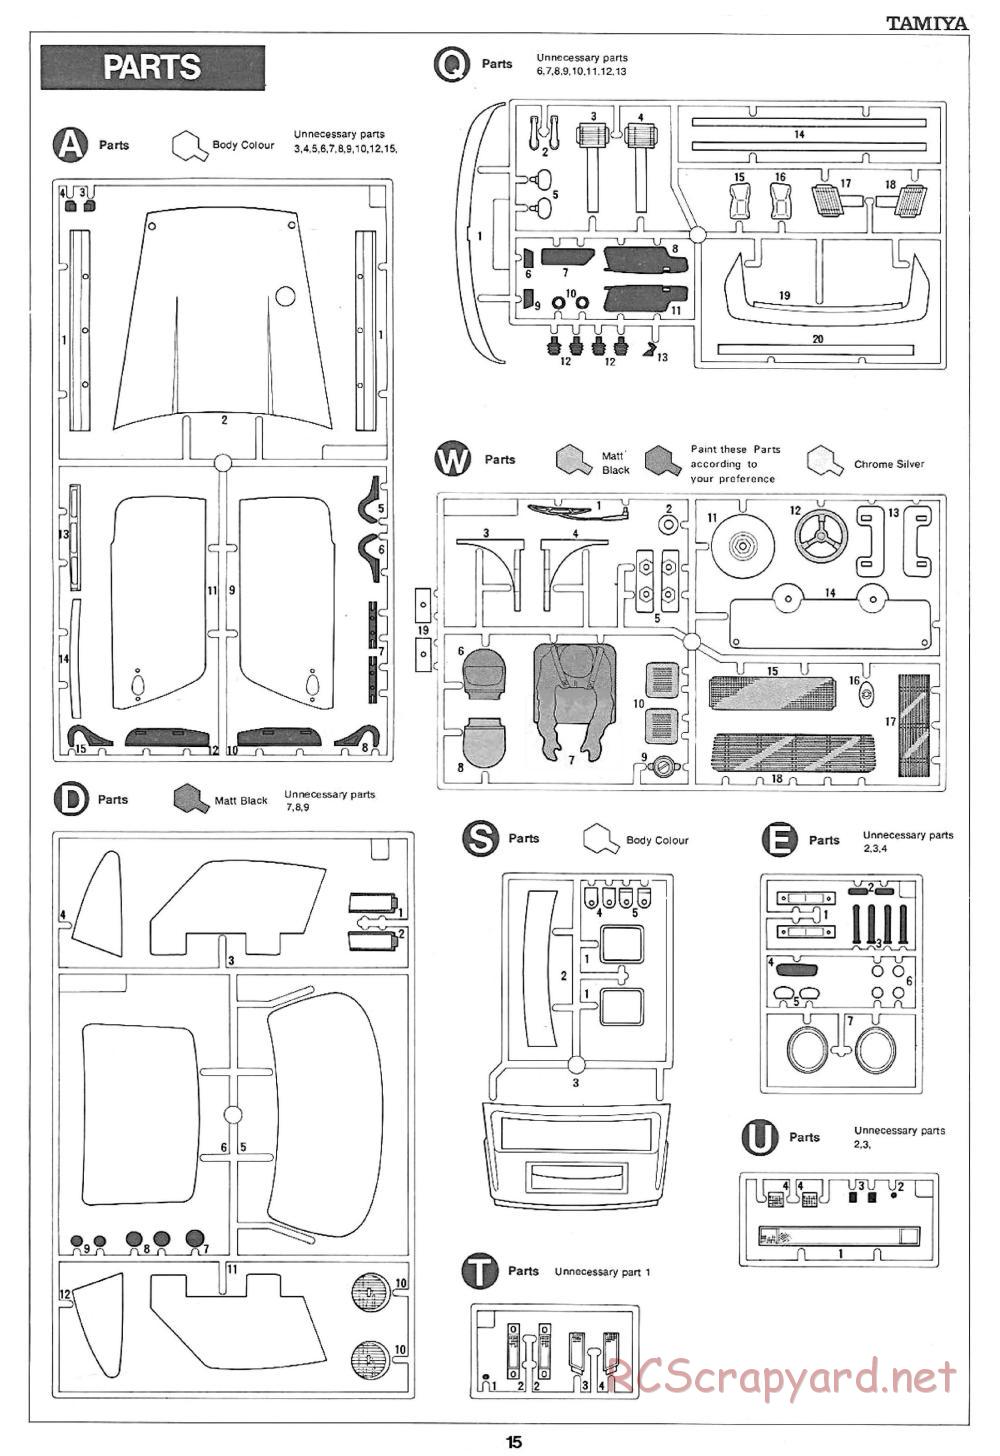 Tamiya - Porsche 934 Turbo RSR - 58001 - Manual - Page 15